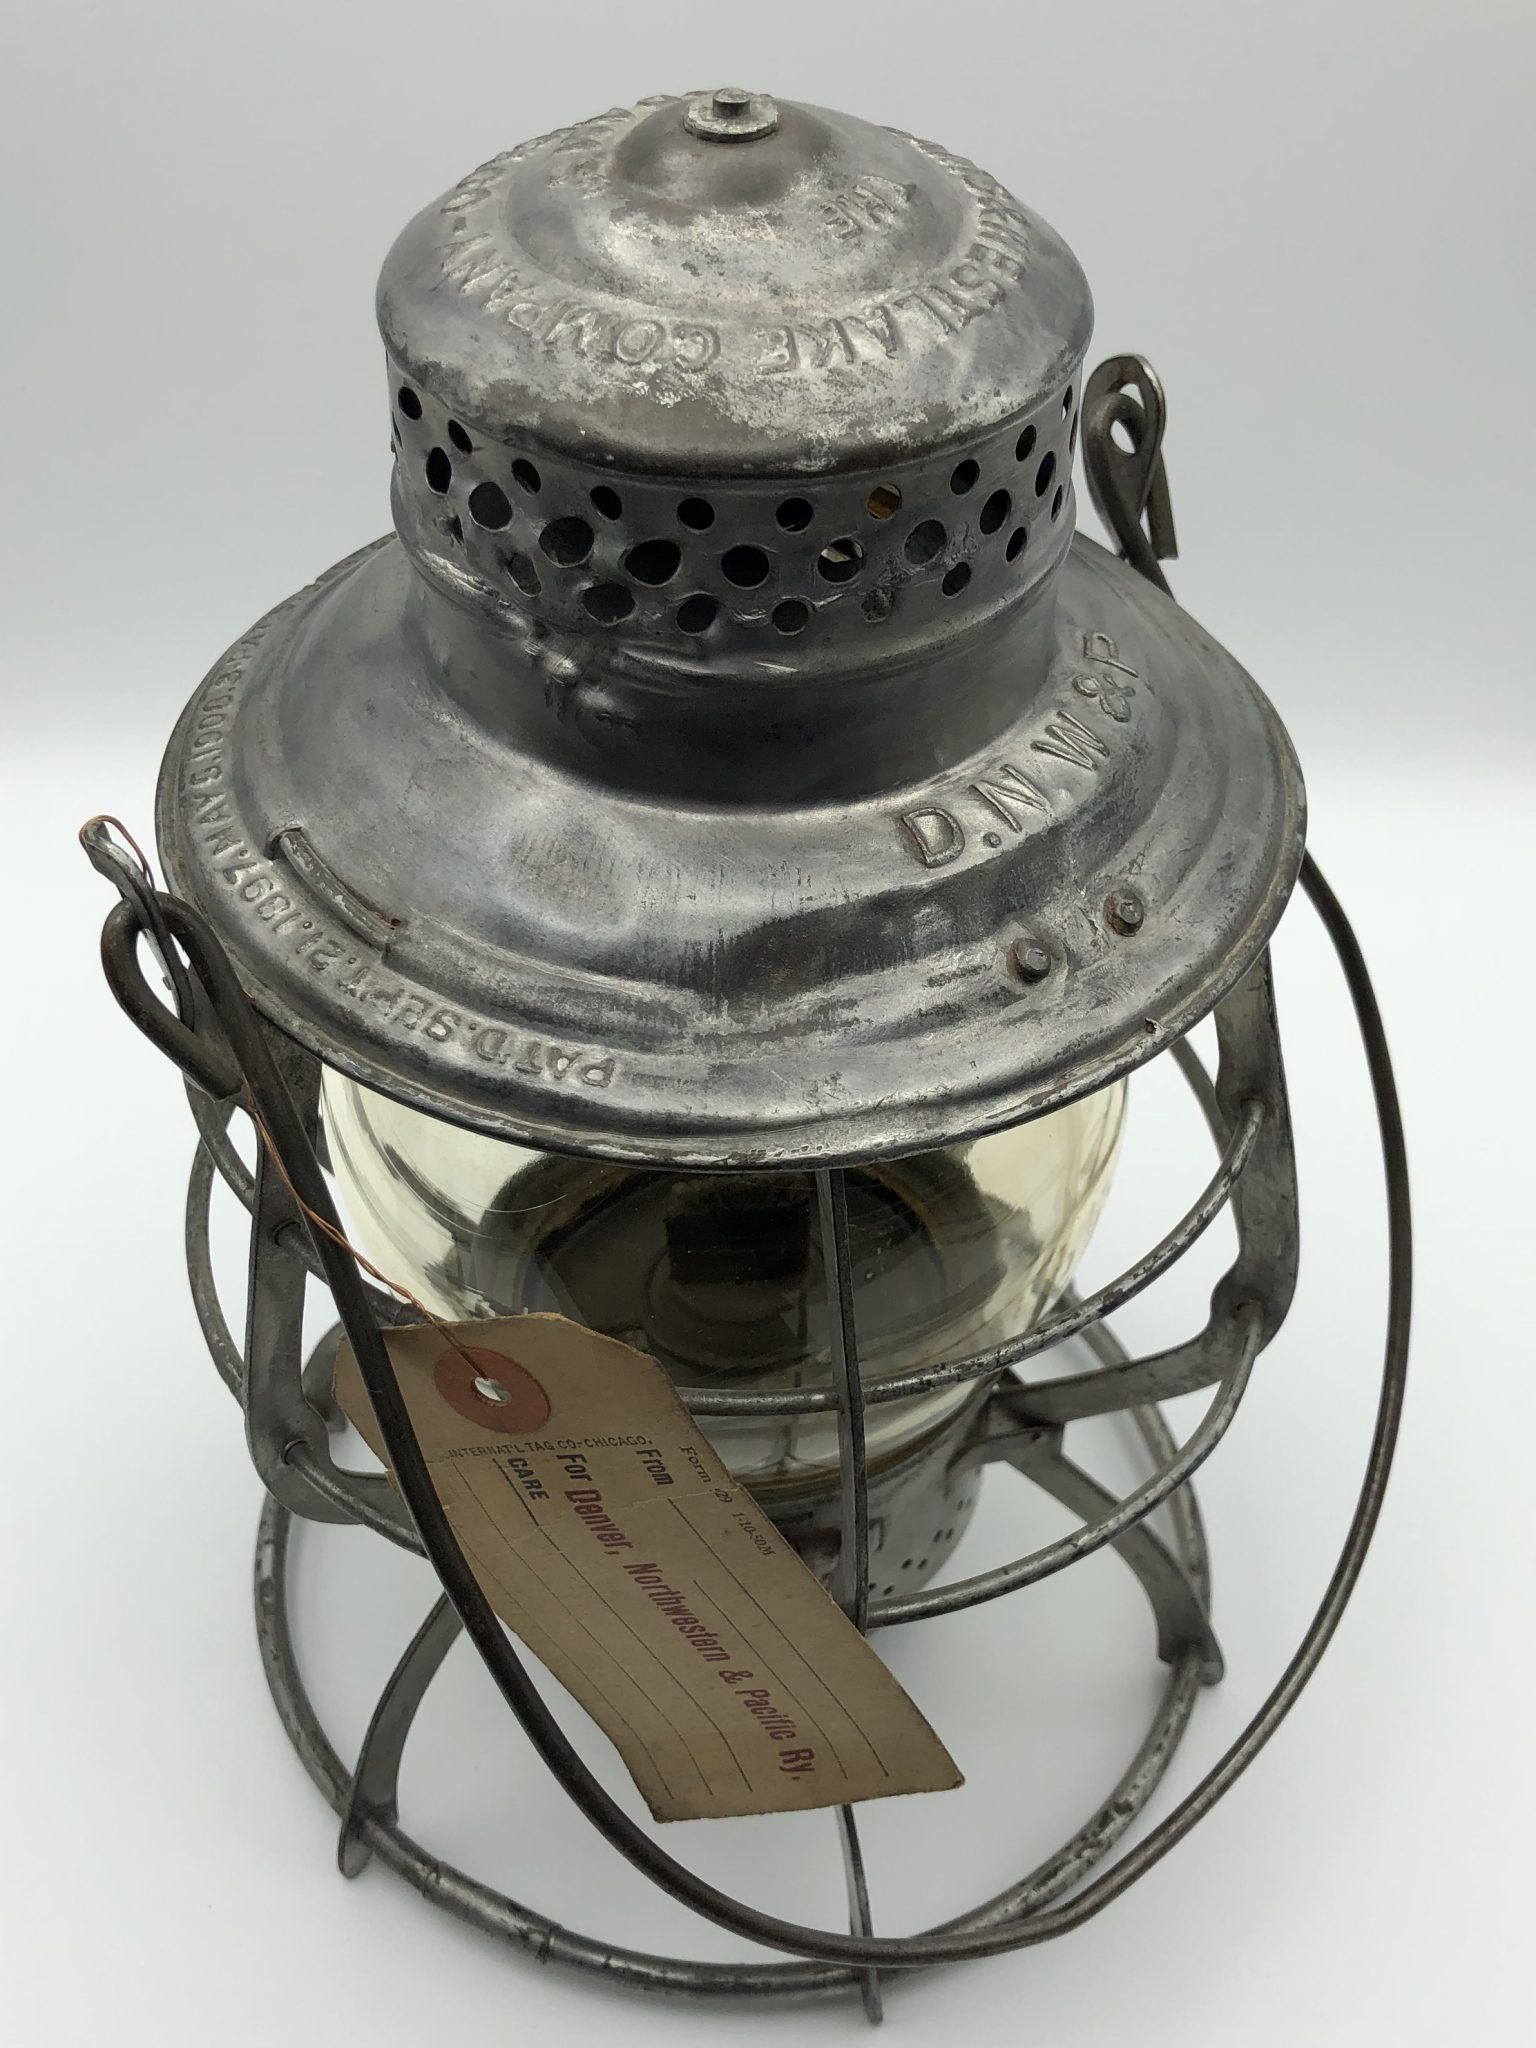 DNW&P Railroad Lantern